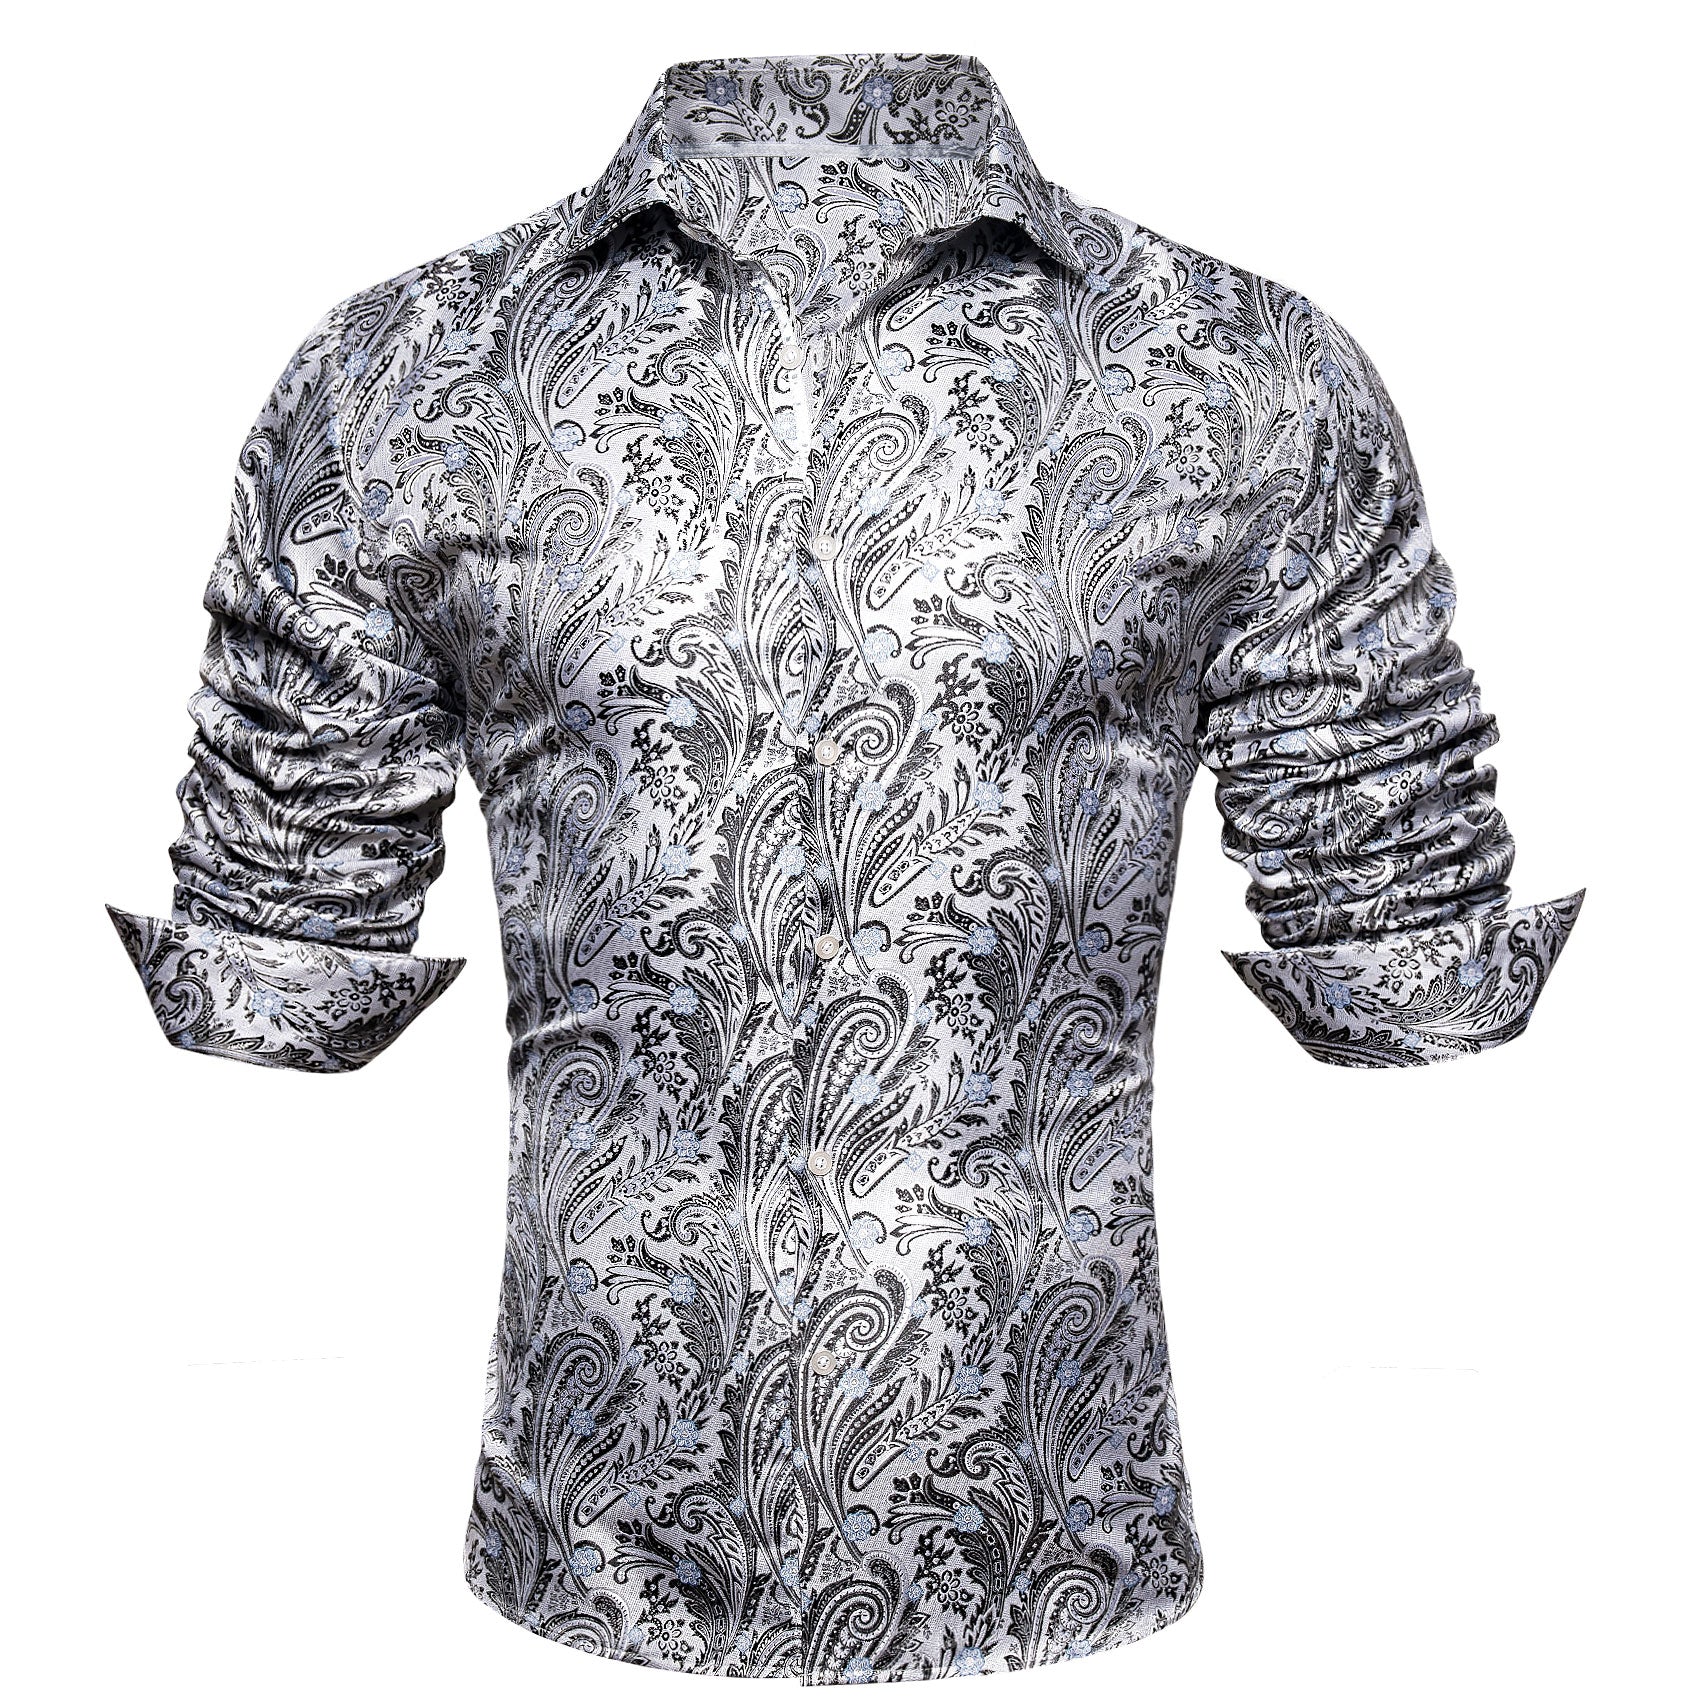 Barry.wang Silver Paisley Silk Shirt